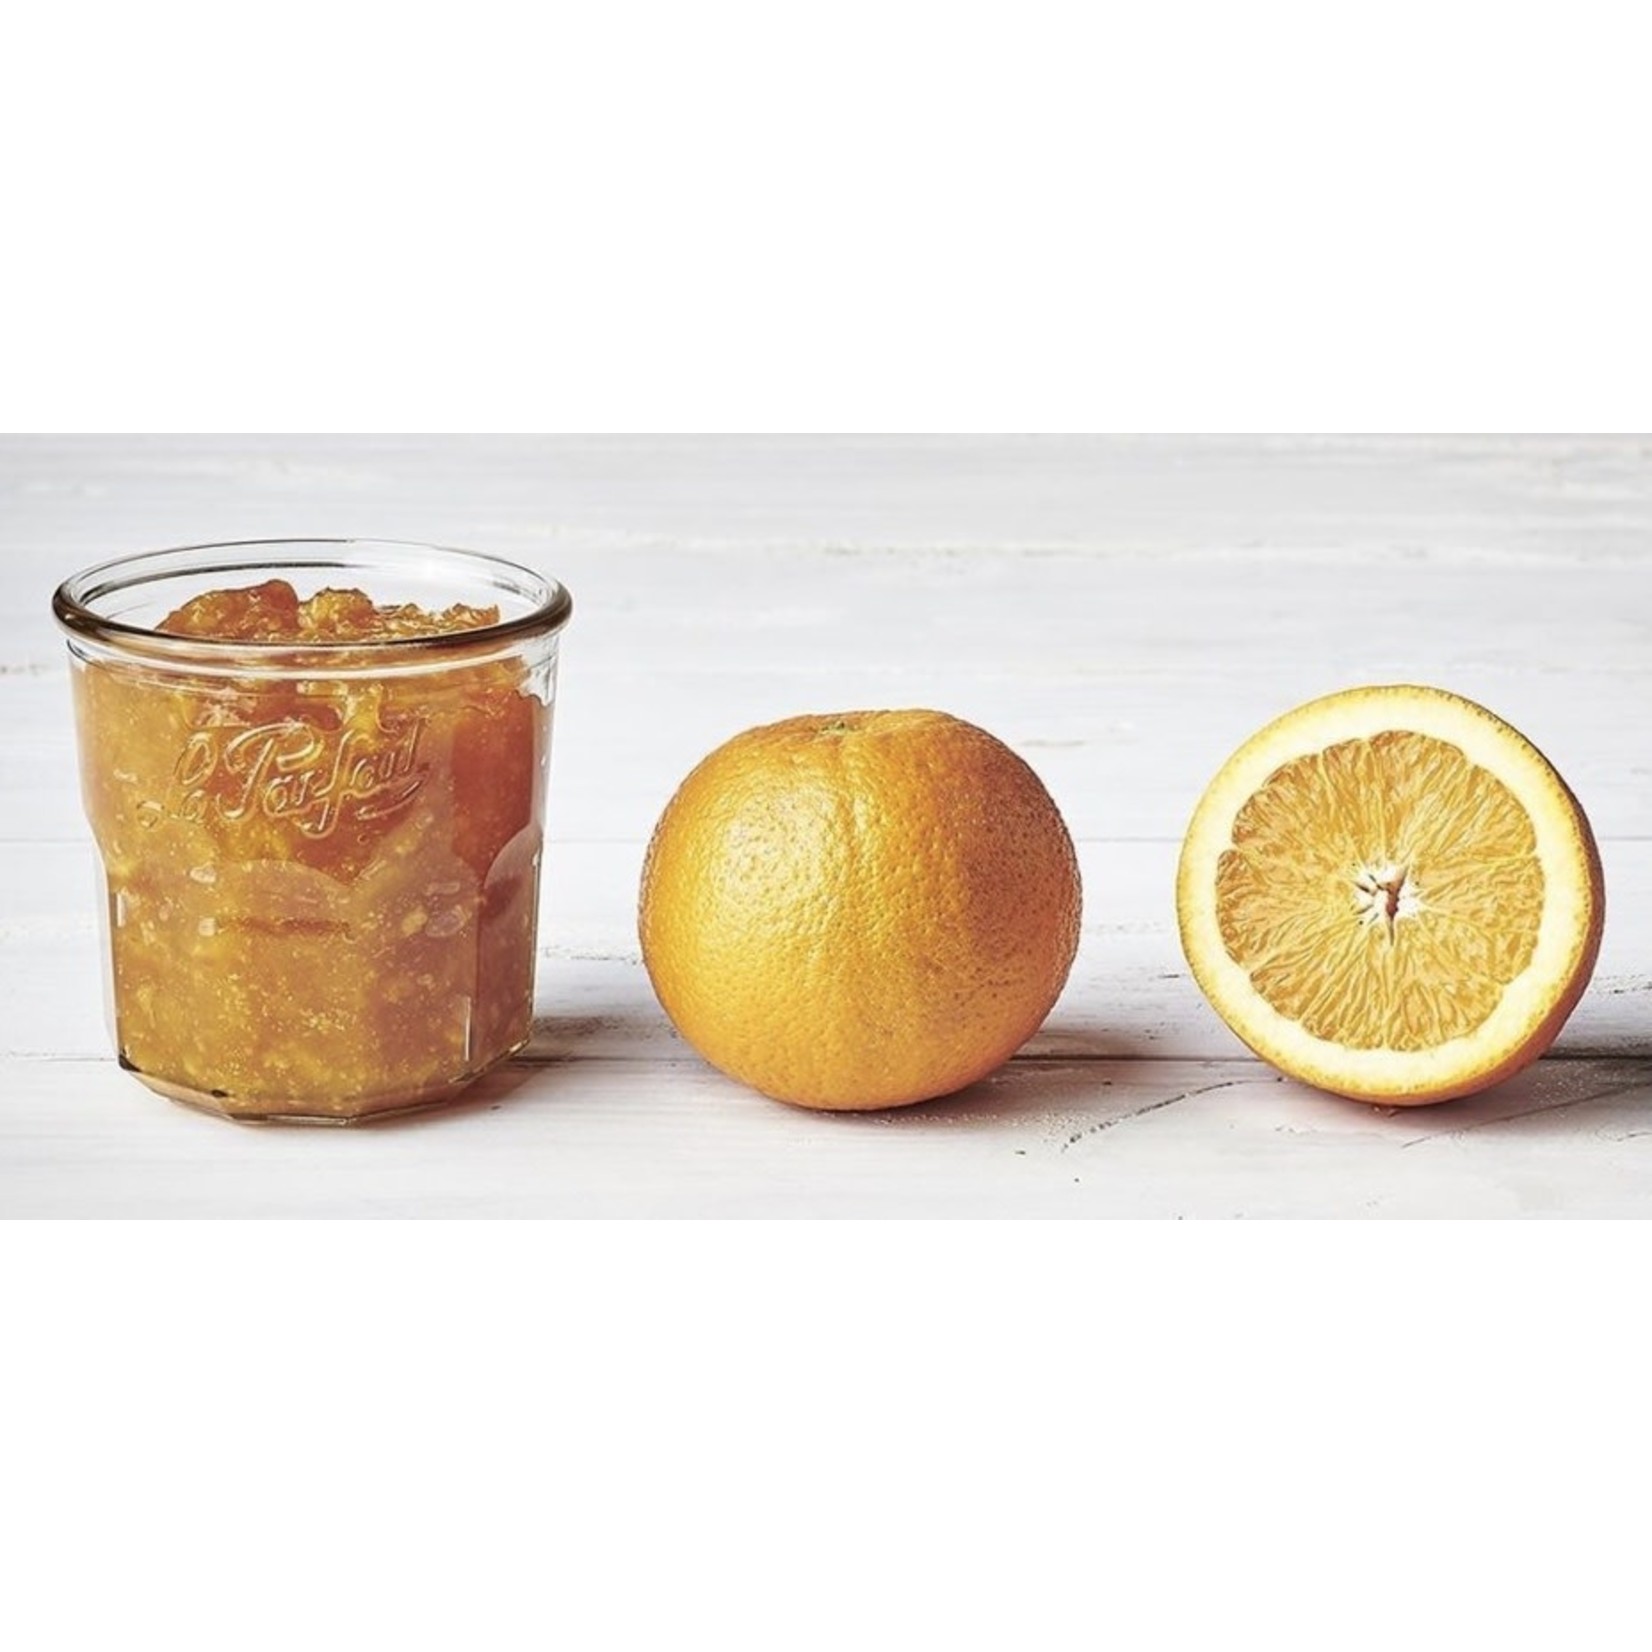 PORT STYLE Jam Jar w/Orange Lid 445ml